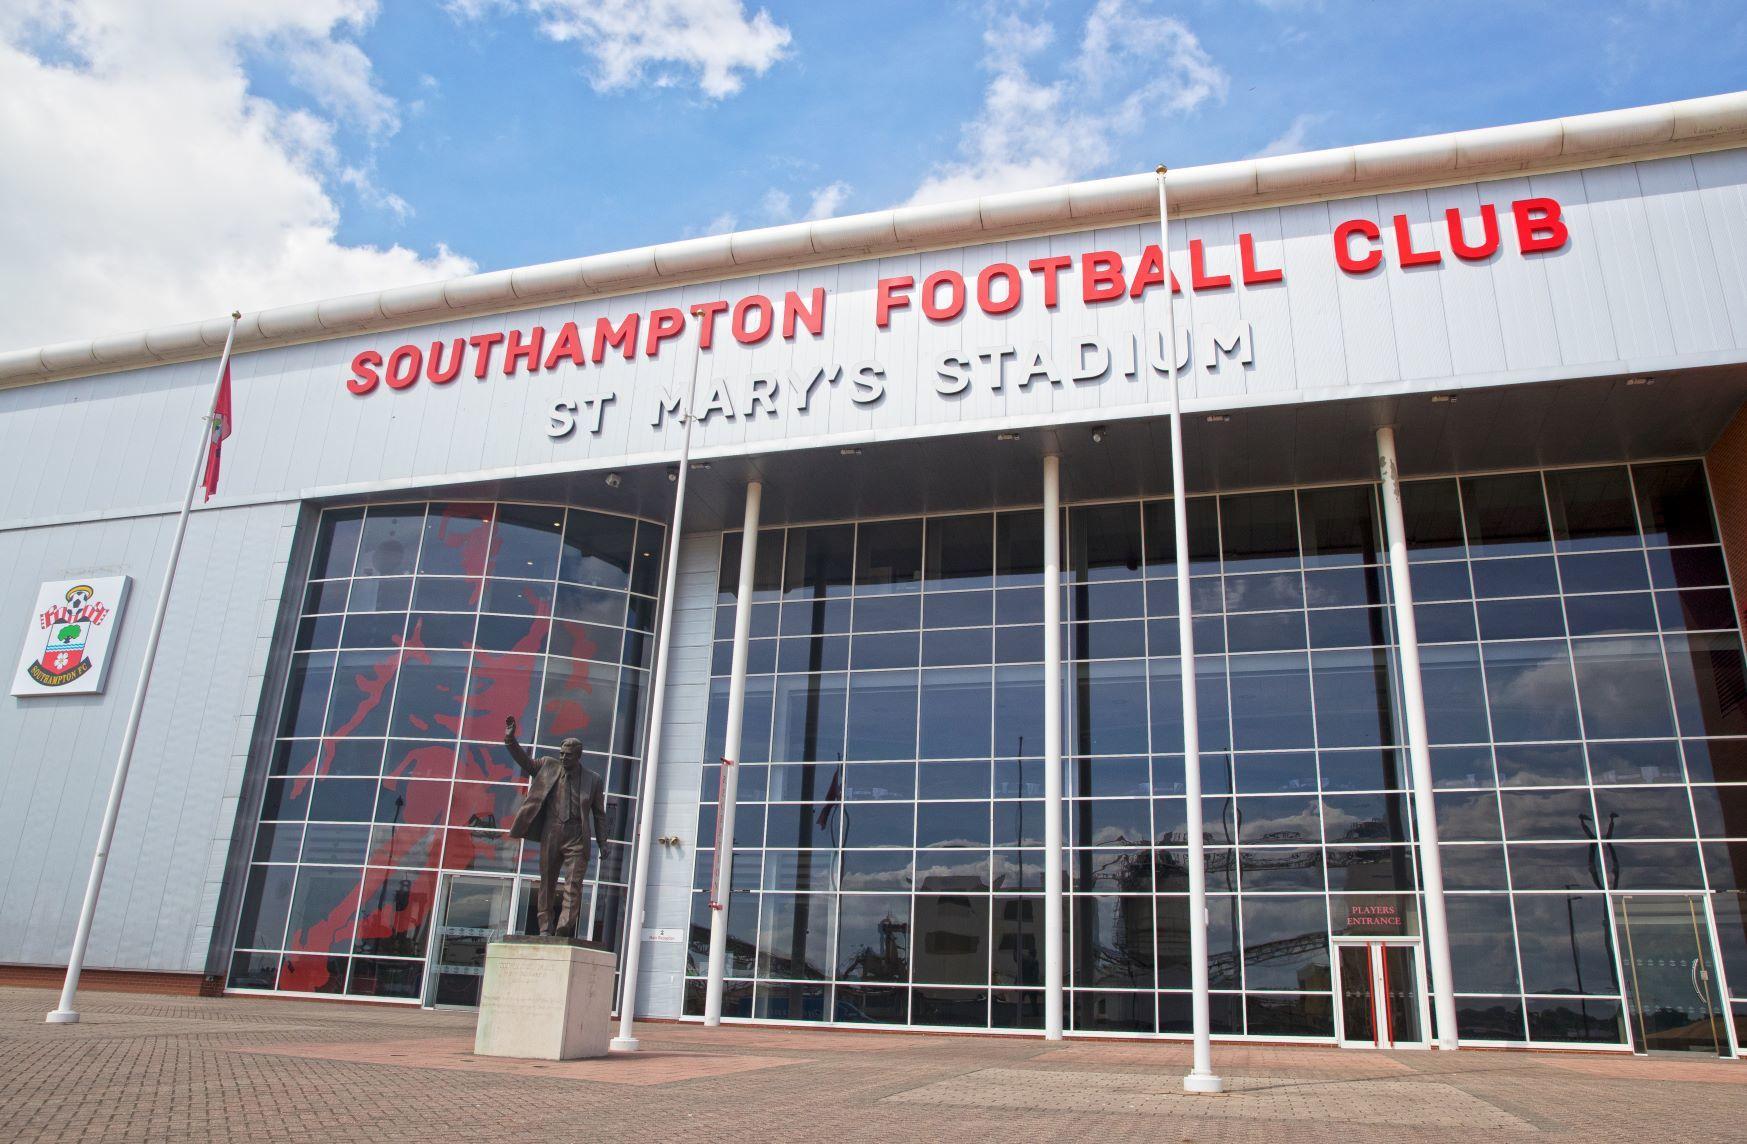 1885, Saints Events - Southampton Football Club photo #5